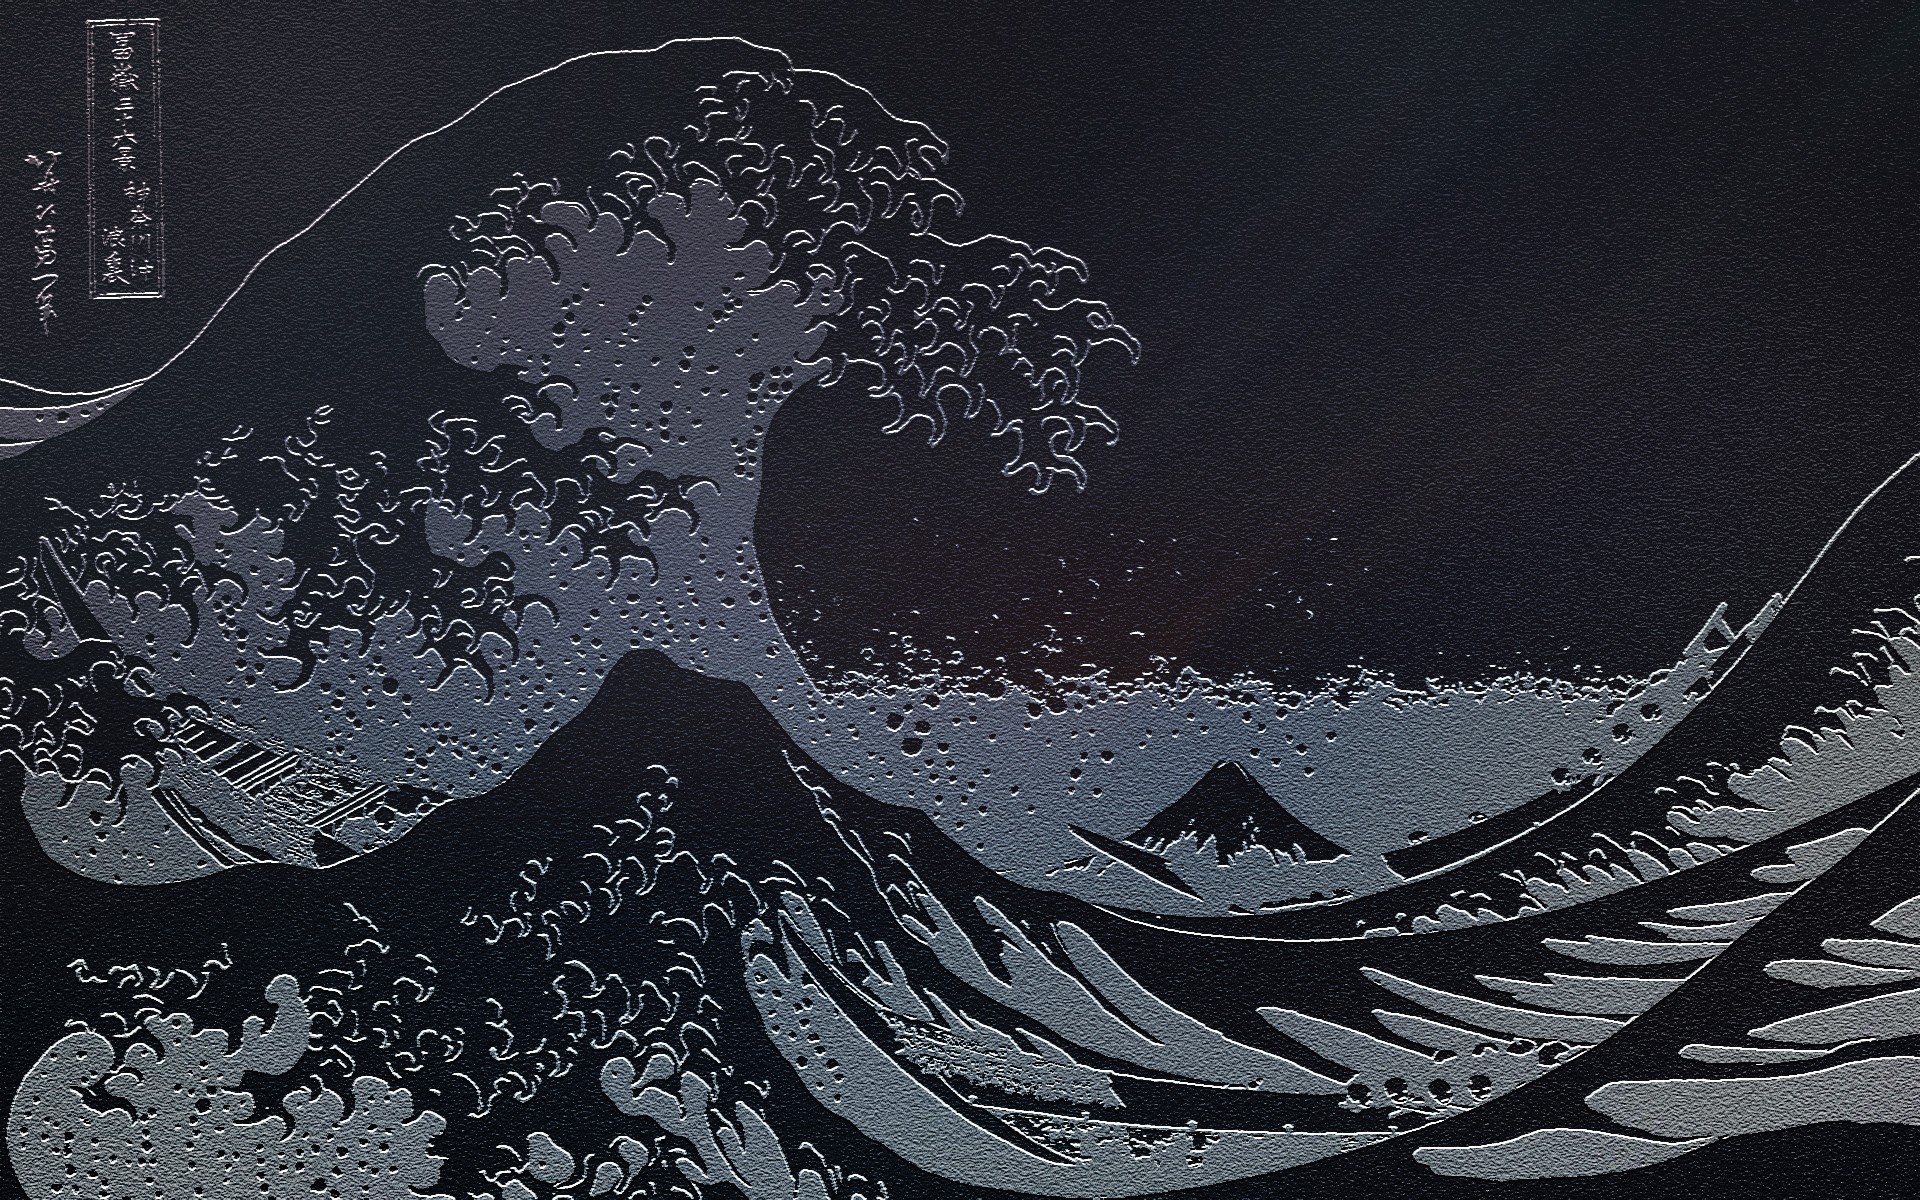 [43+] Great Wave Off Kanagawa Wallpaper | Wallpapersafari.com